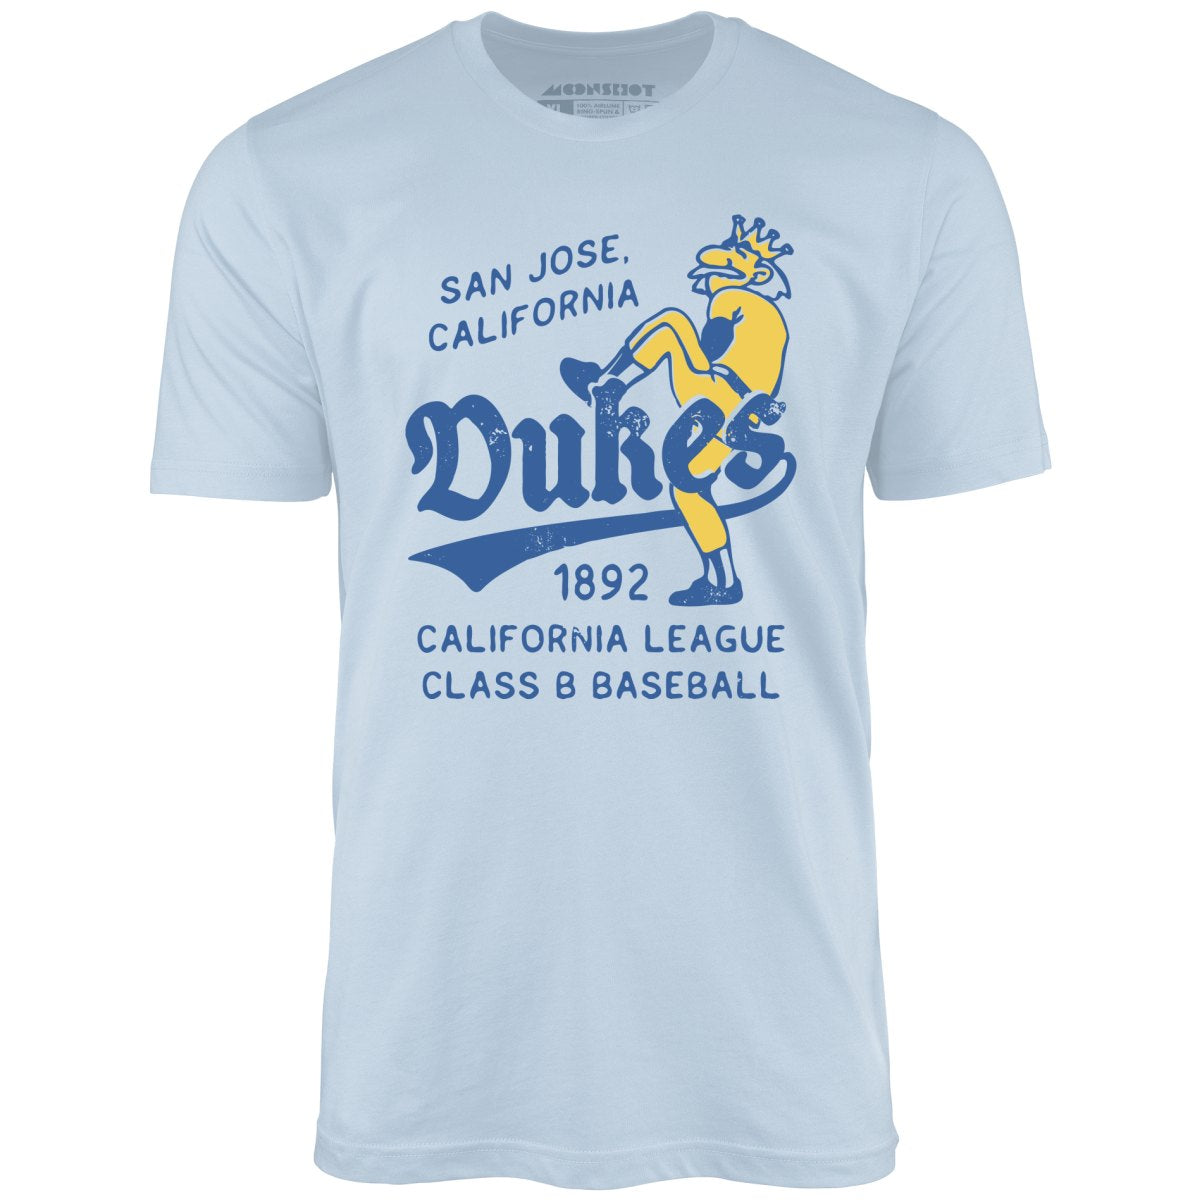 San Jose Dukes - California - Vintage Defunct Baseball Teams - Unisex T-Shirt